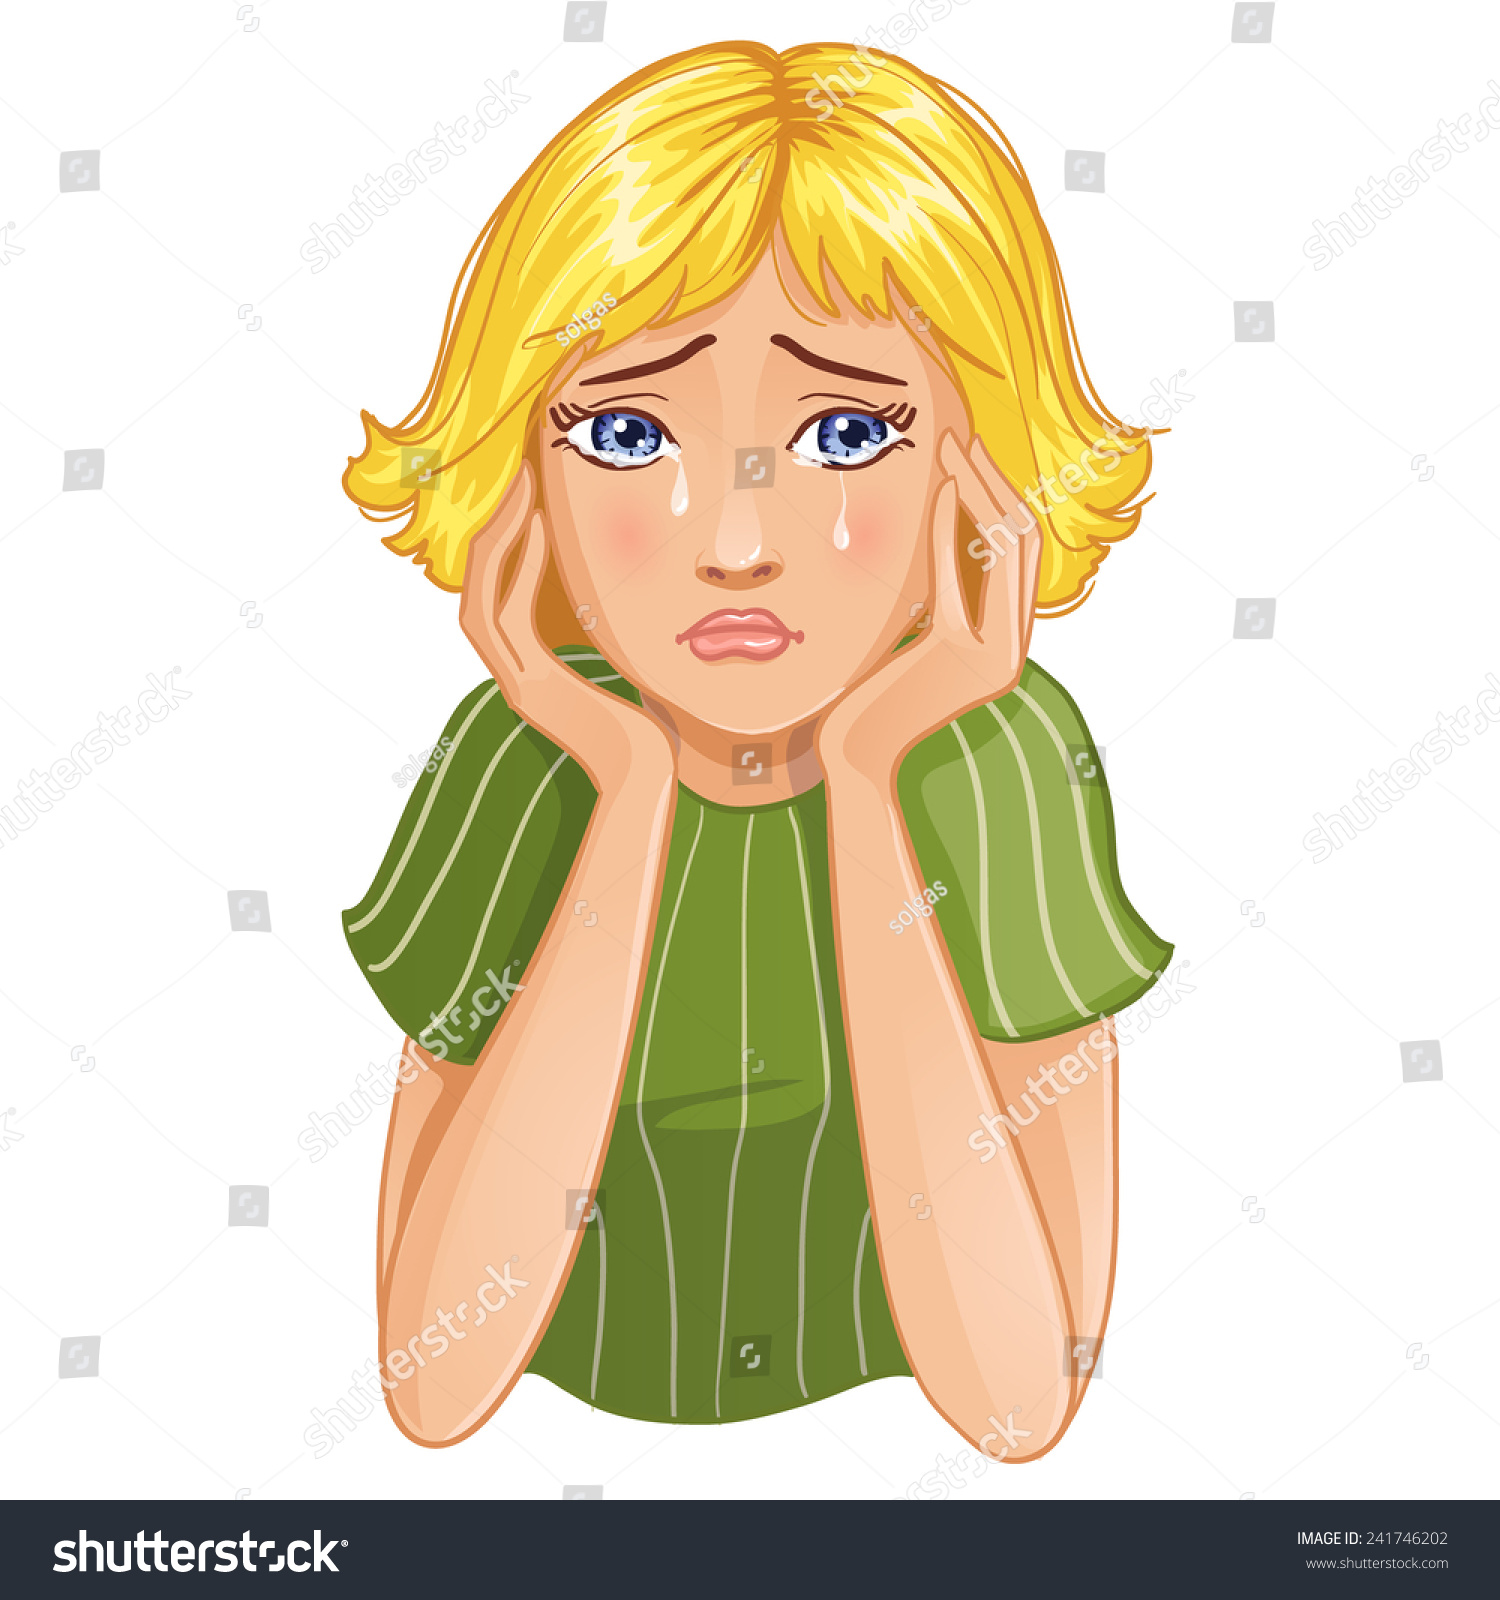 Sad Crying Cartoon Girl Vector Image Stock Vector (Royalty Free) 241746202 ...